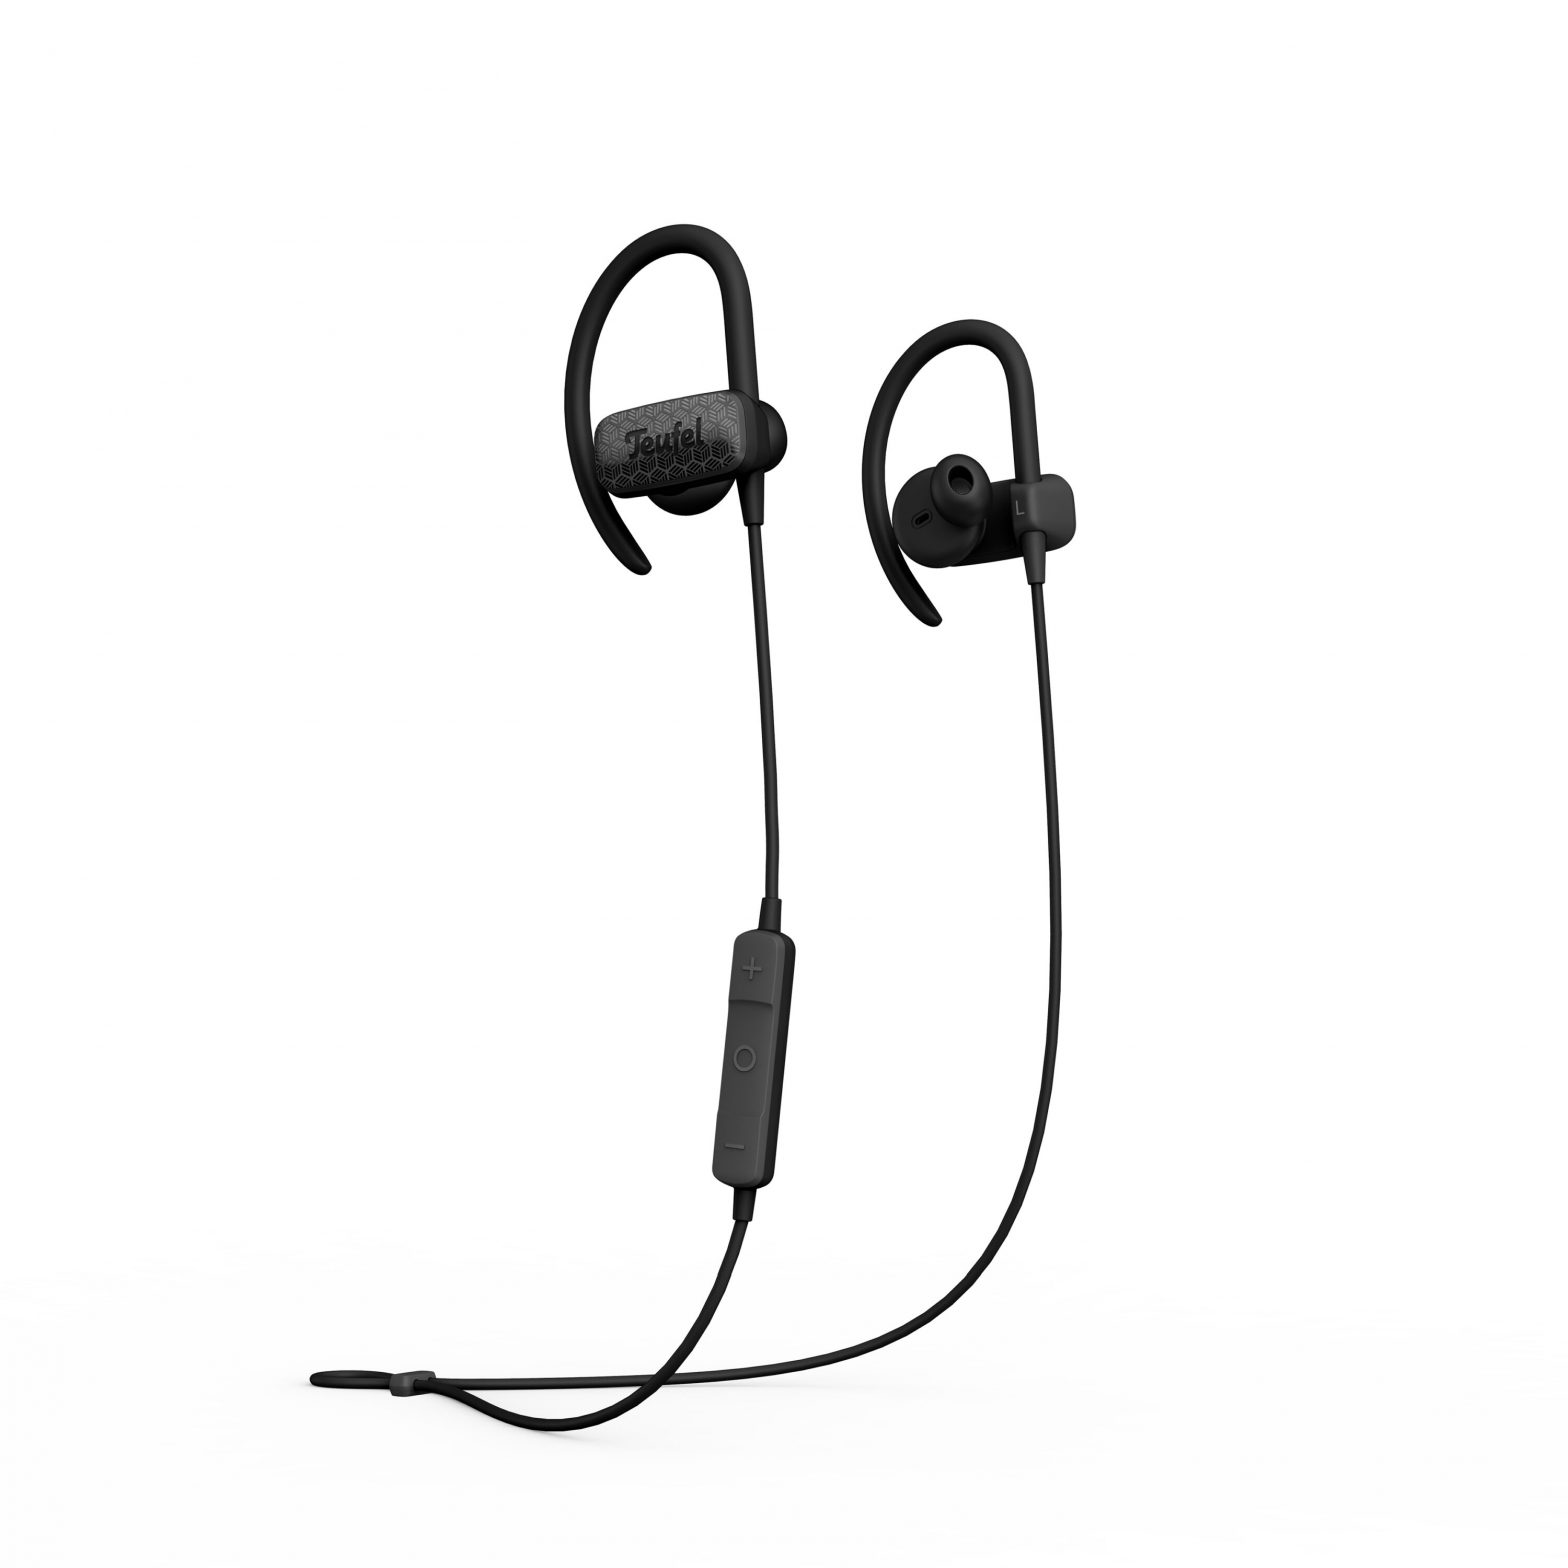 Teufel AIRY SPORTS Bluetooth In-Ear Headphone User Manual